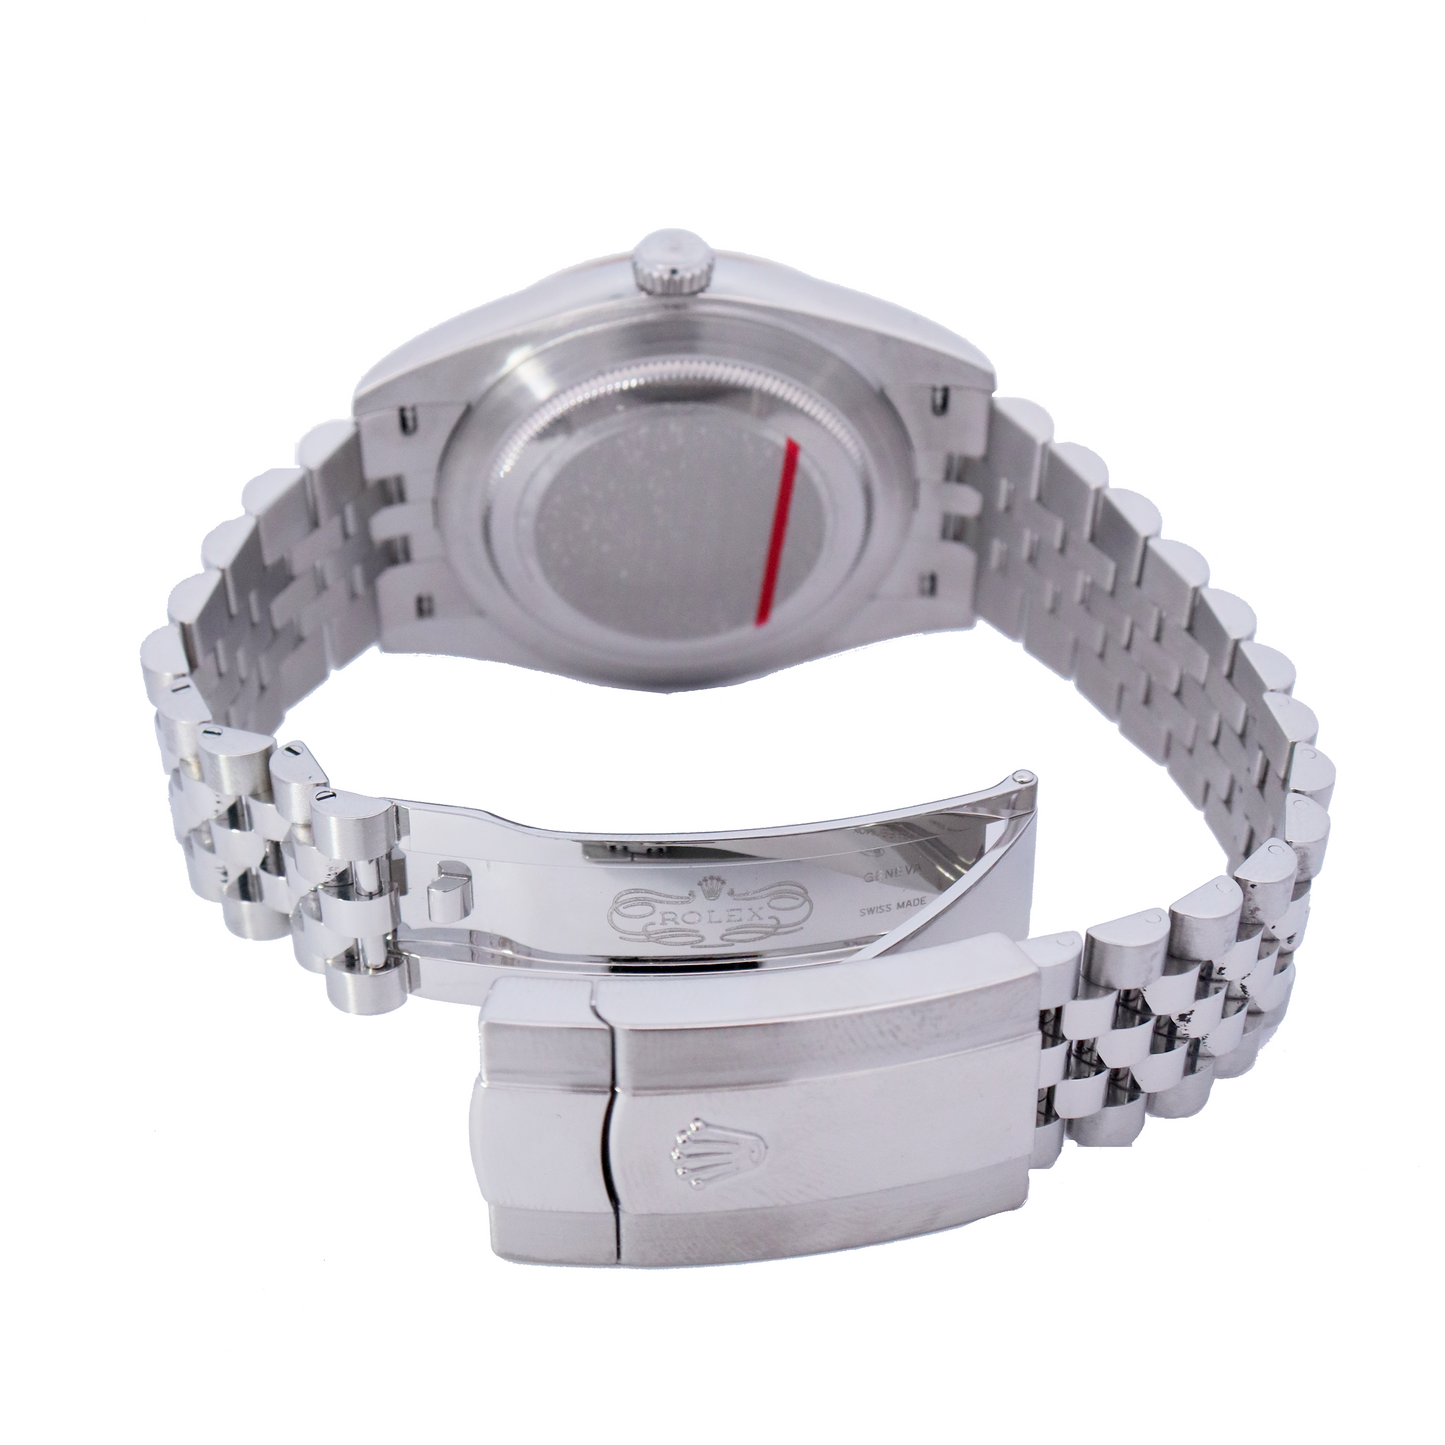 Rolex Datejust Stainless Steel 41mm Blue Roman Dial Watch | Ref# 126334 - Happy Jewelers Fine Jewelry Lifetime Warranty